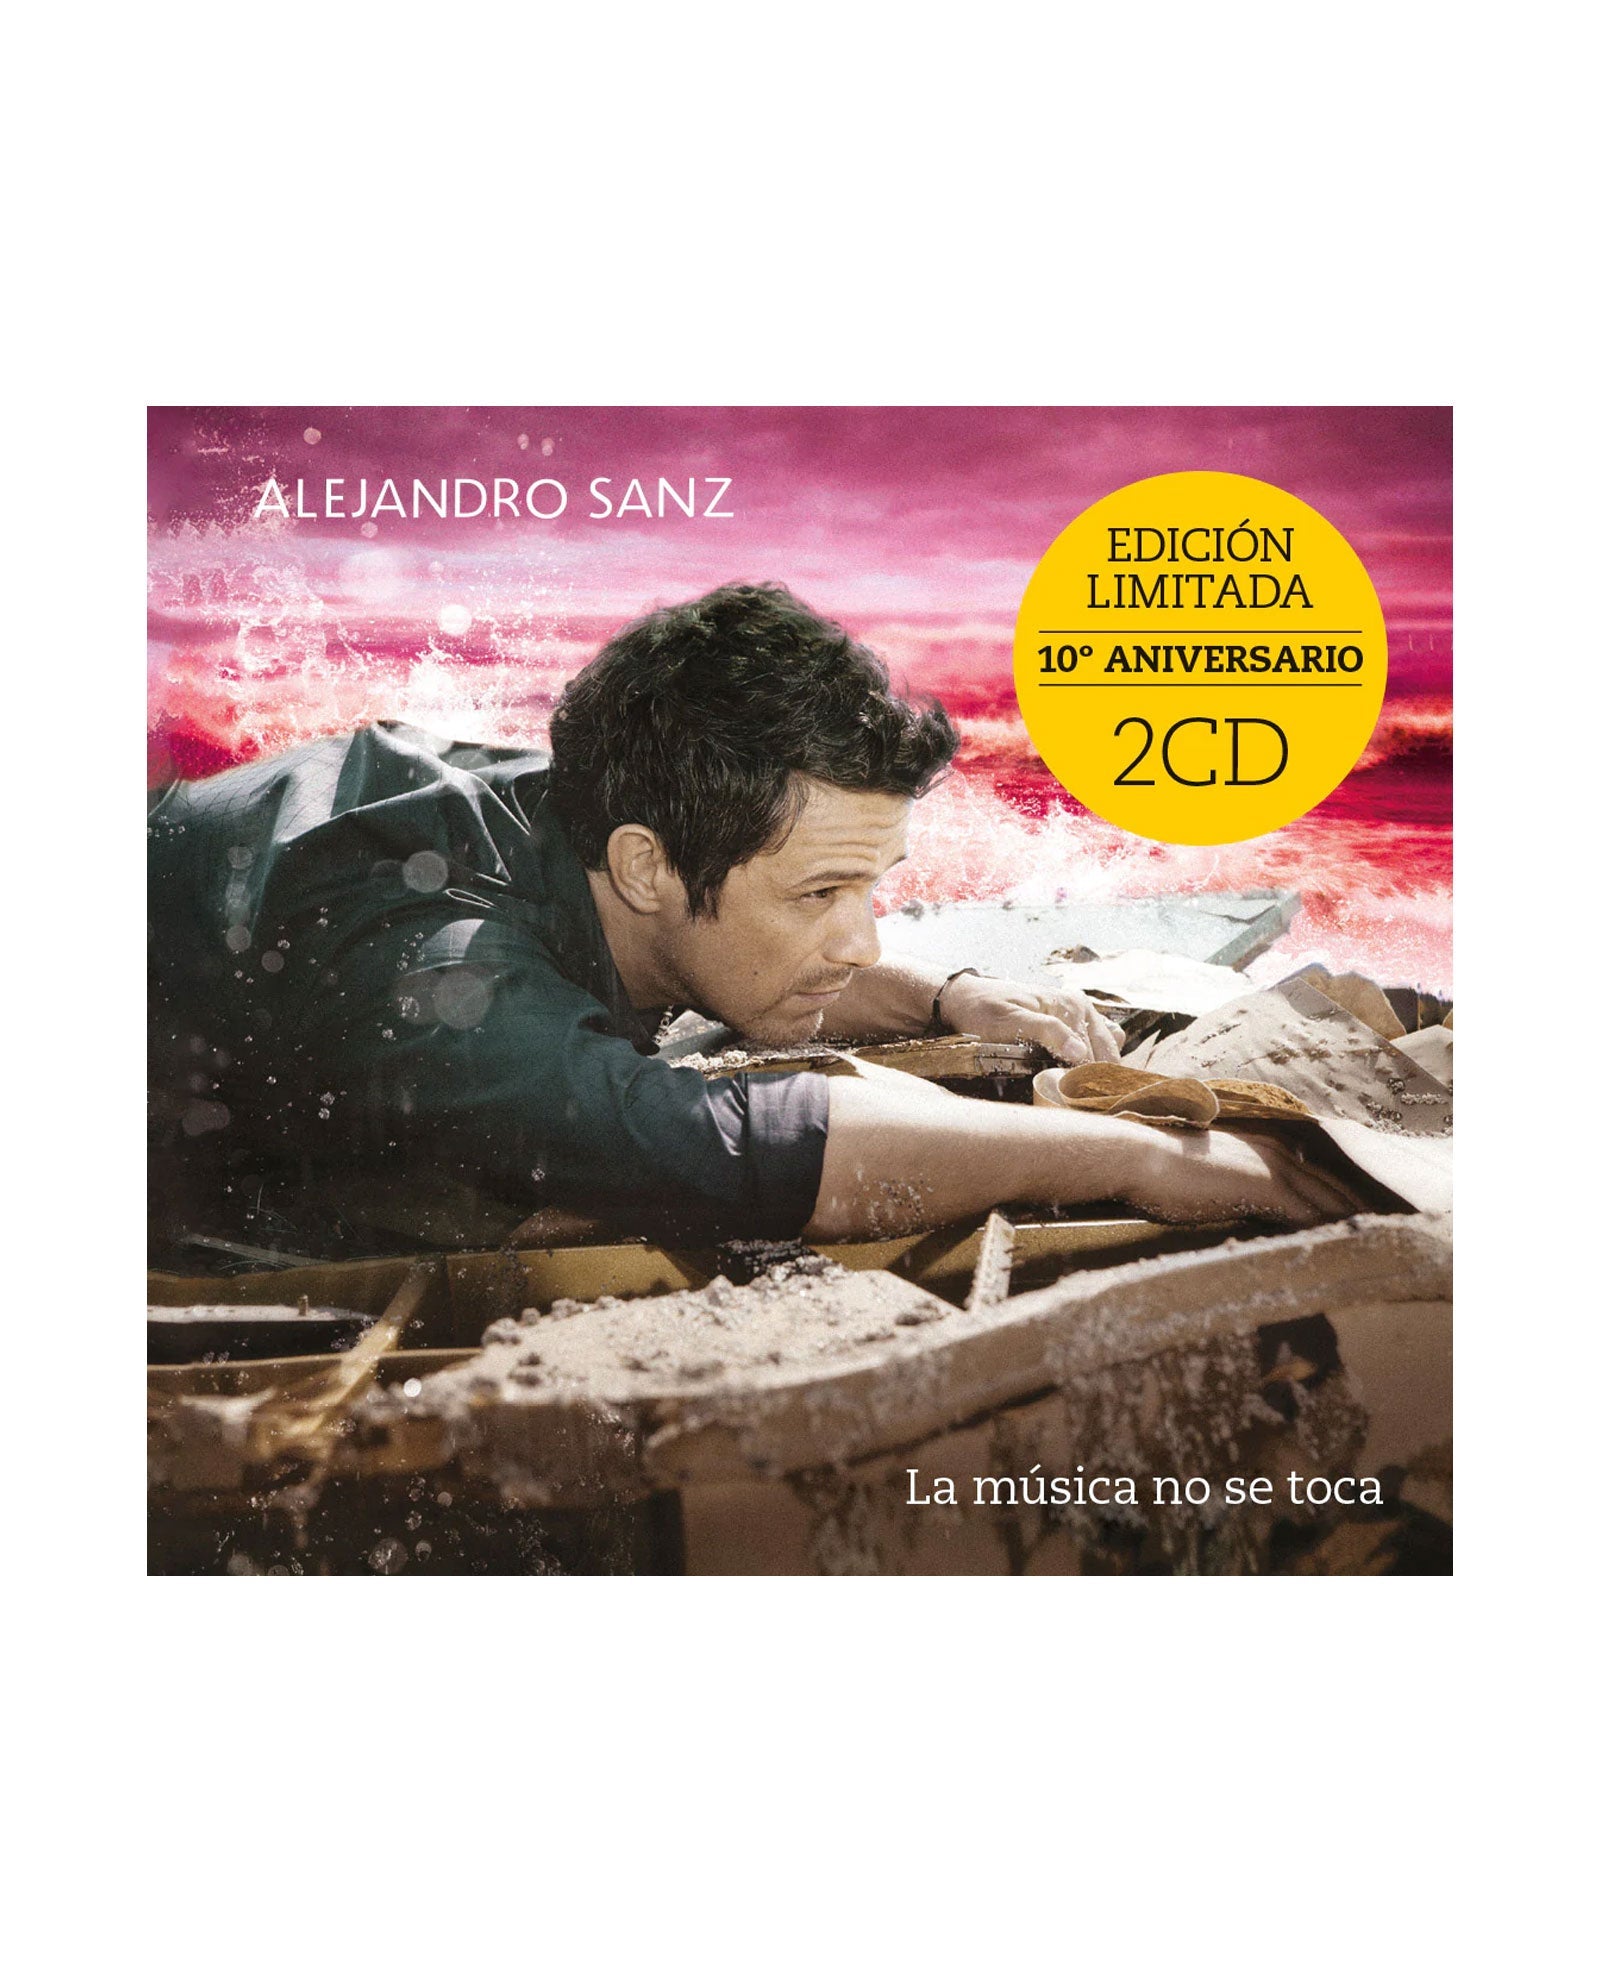 Alejandro Sanz - 2CD "La Música No Se Toca" Ed 10º Aniversario - Rocktud - Rocktud